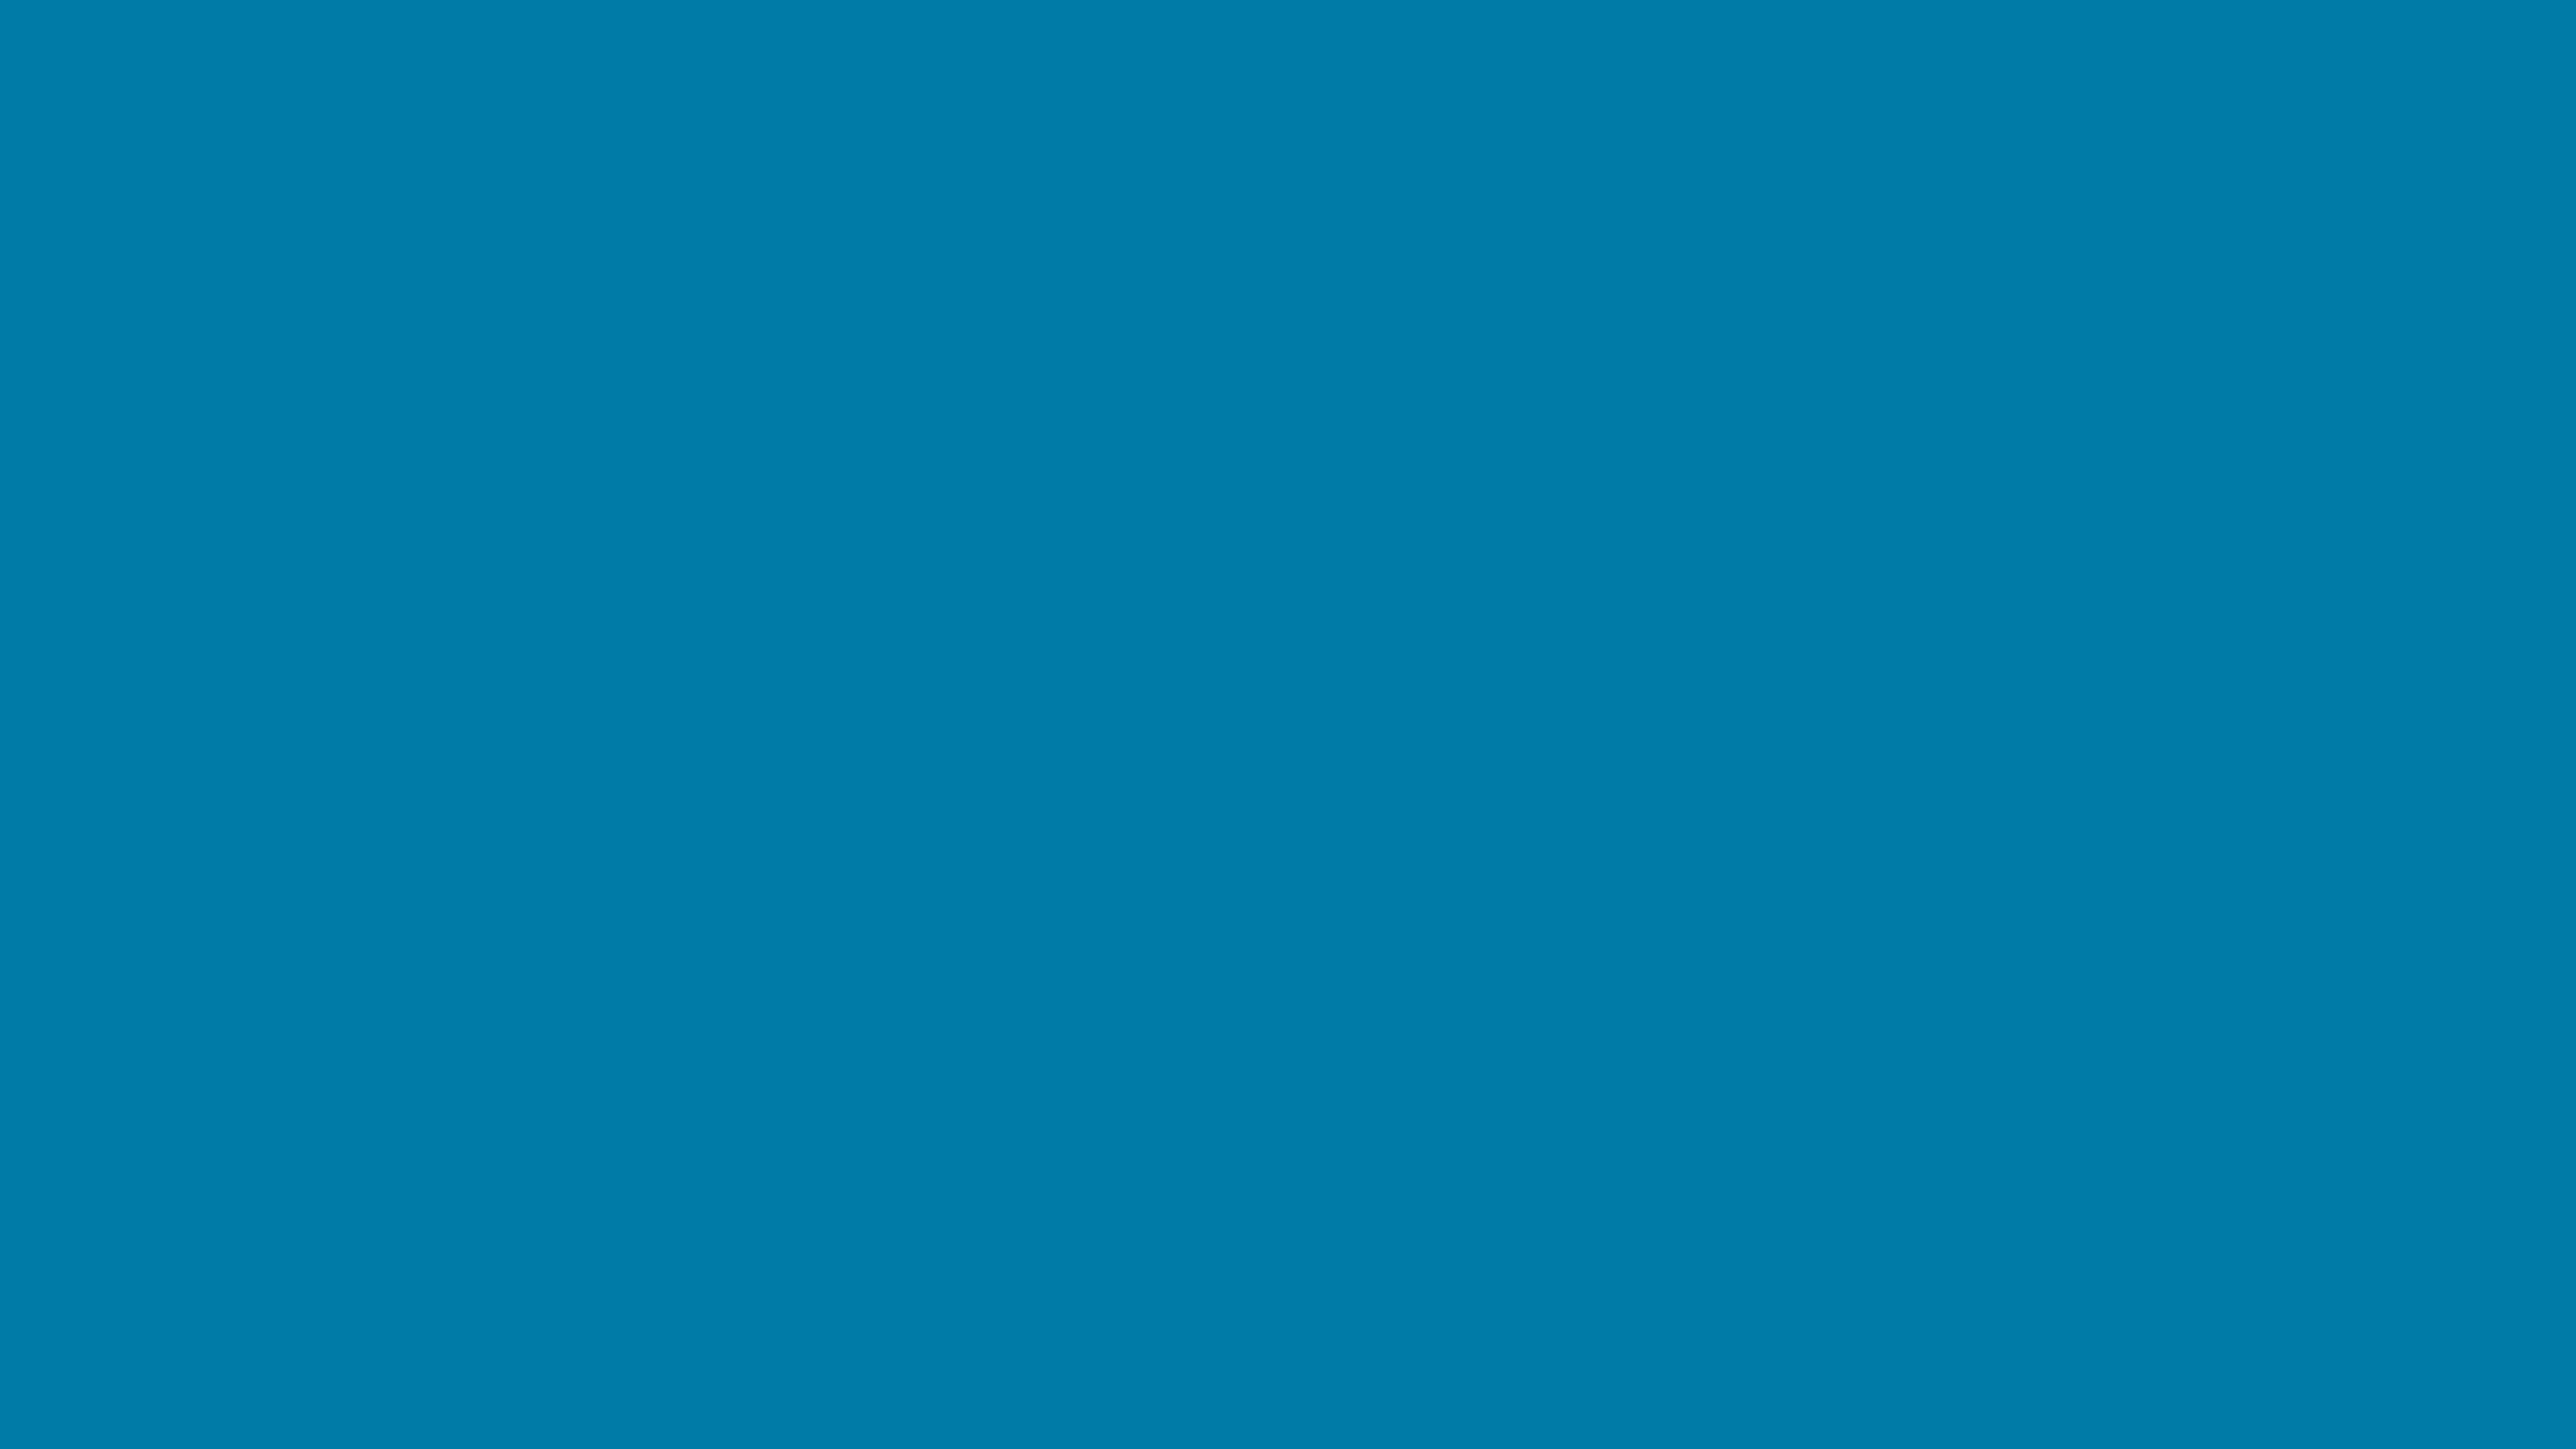 3840x2160 Celadon Blue Solid Color Background